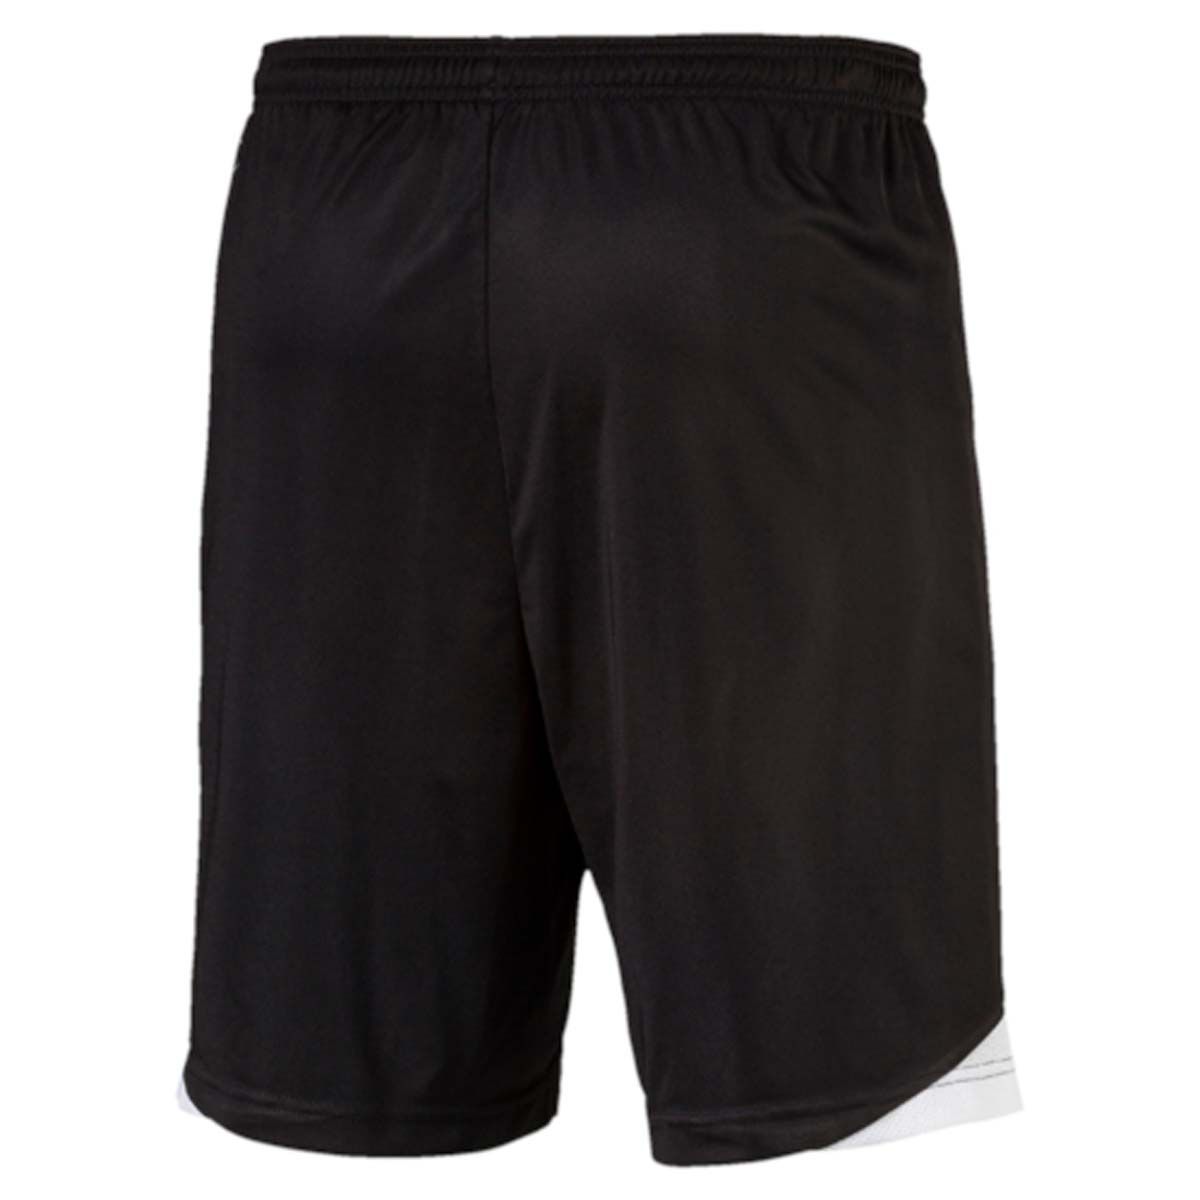   Puma FtblTRG Shorts, : , . 655208_03.  M (46/48)